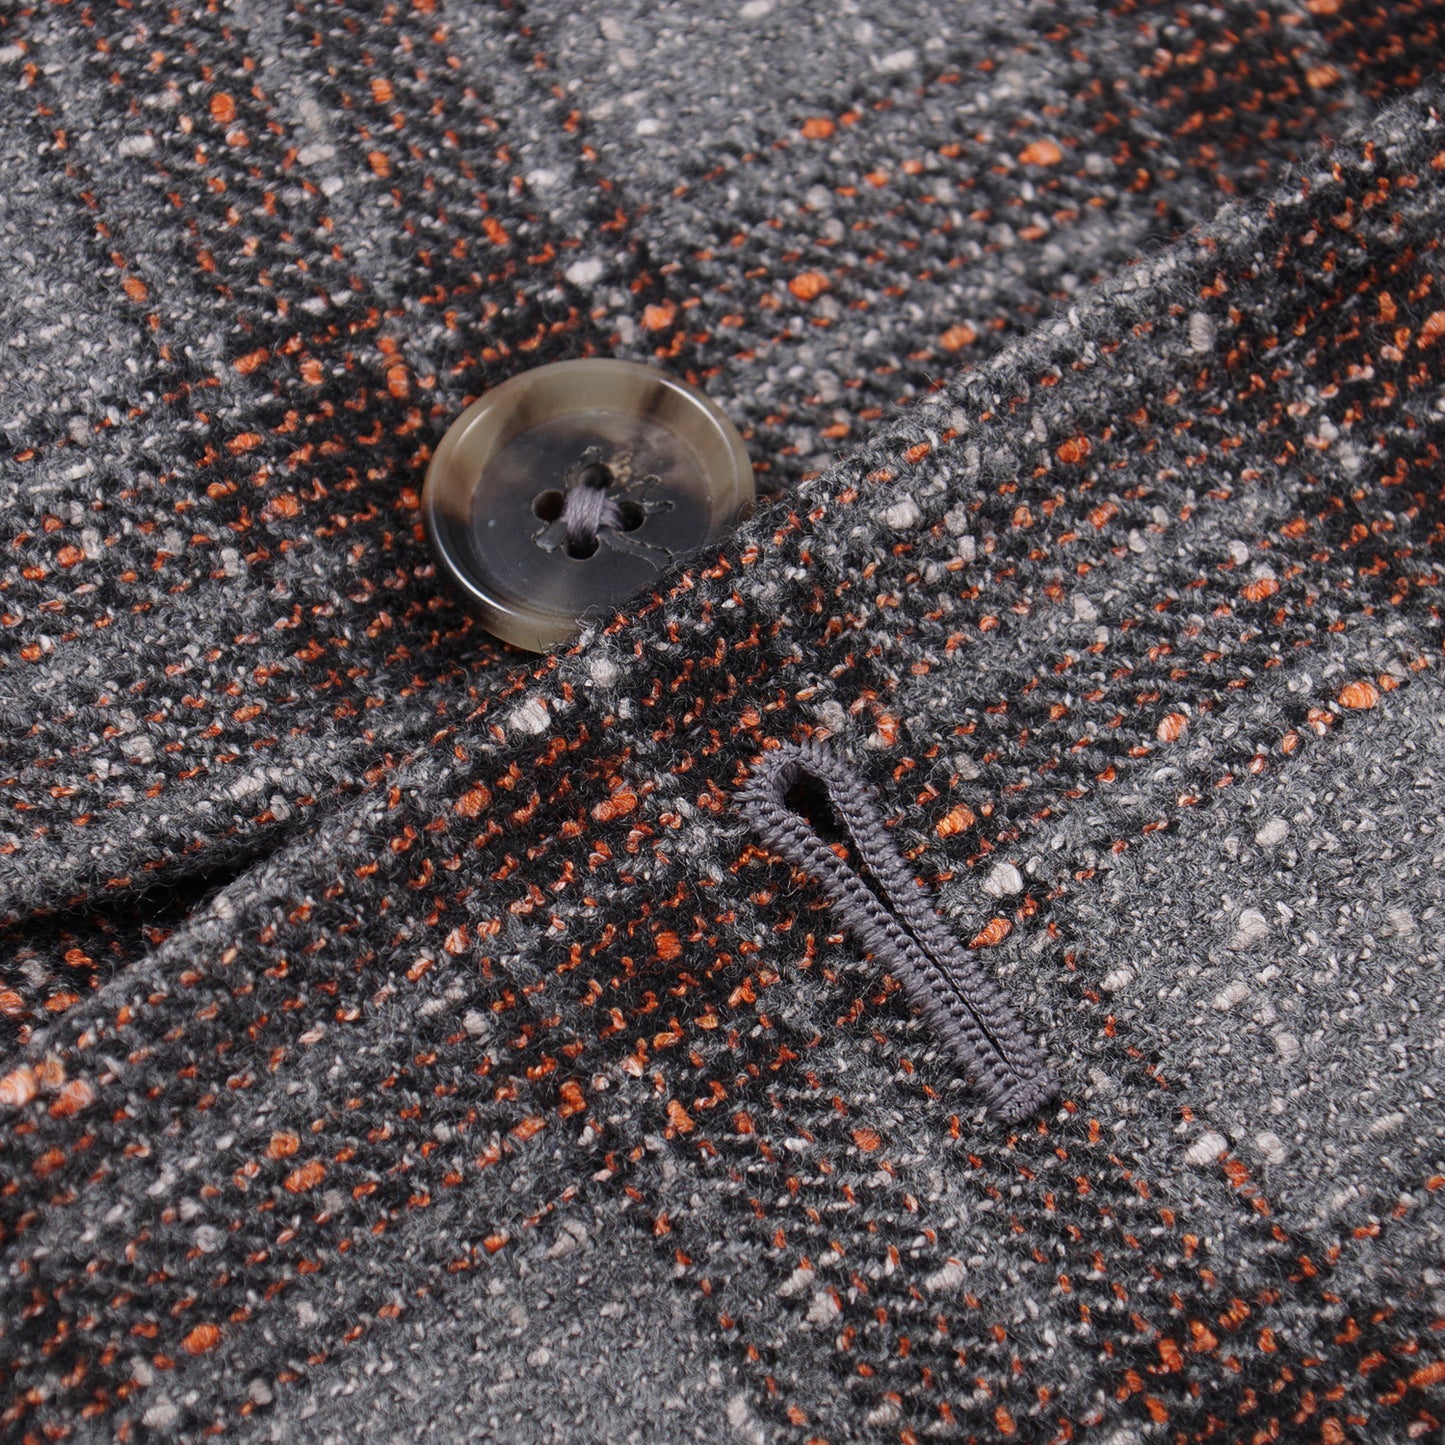 Isaia Slim-Fit Donegal Wool Sport Coat - Top Shelf Apparel